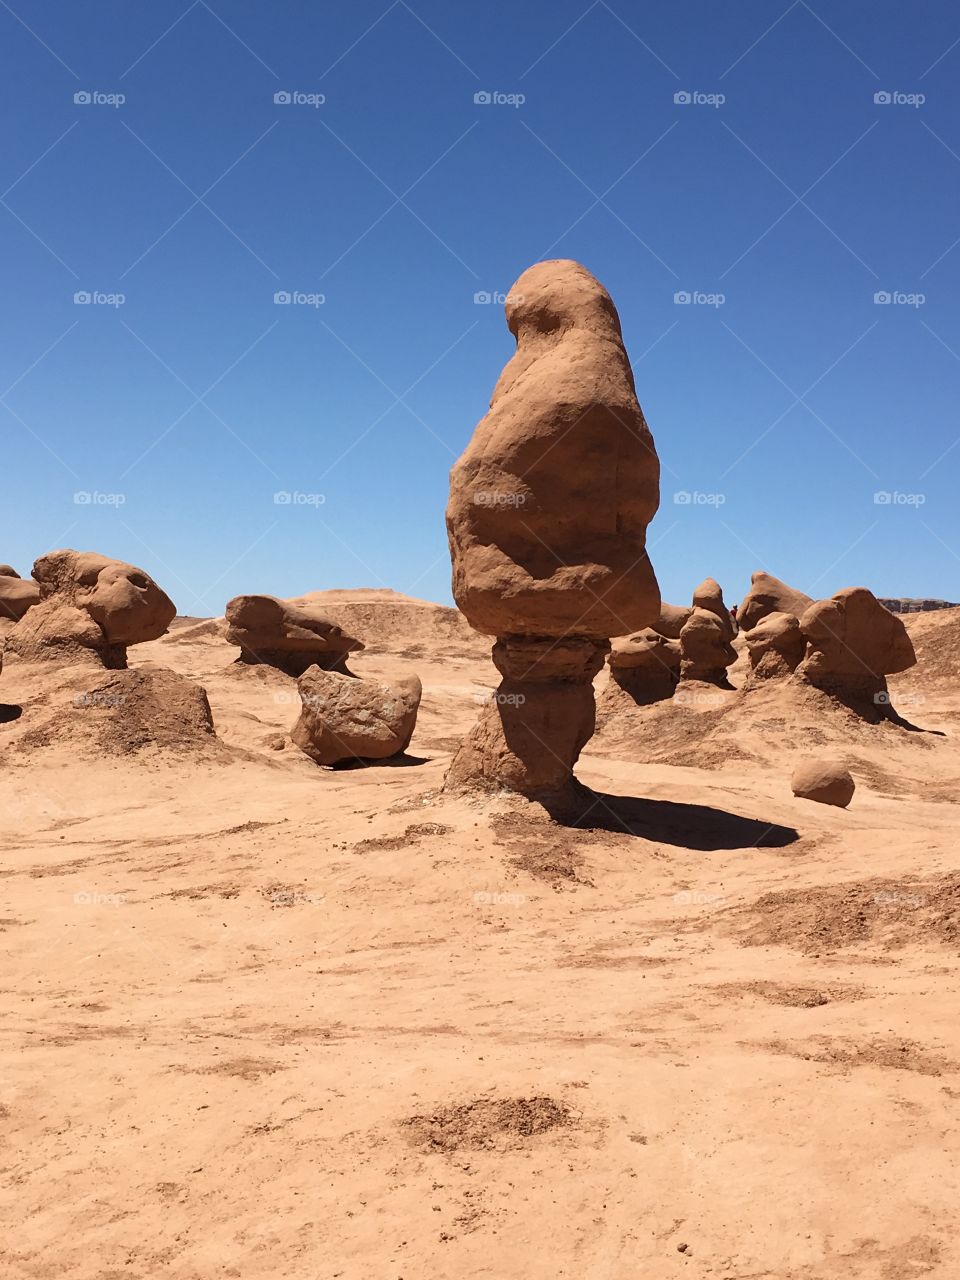 No Person, Sand, Rock, Travel, Desert